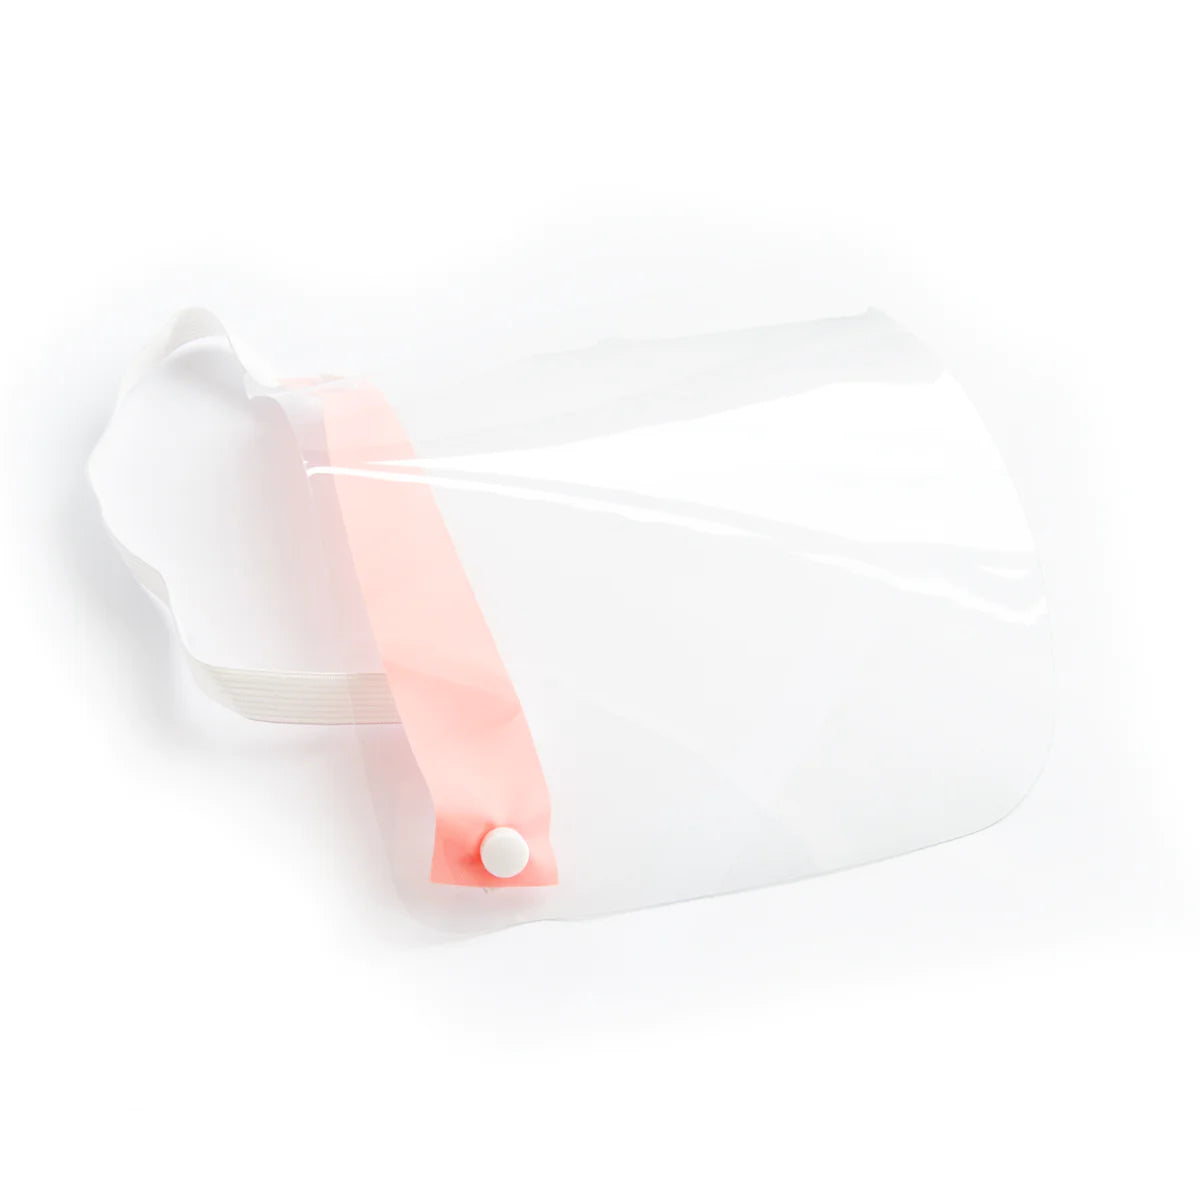 Spatmasker | Gezichtsmasker | Beschermkap voor gezicht